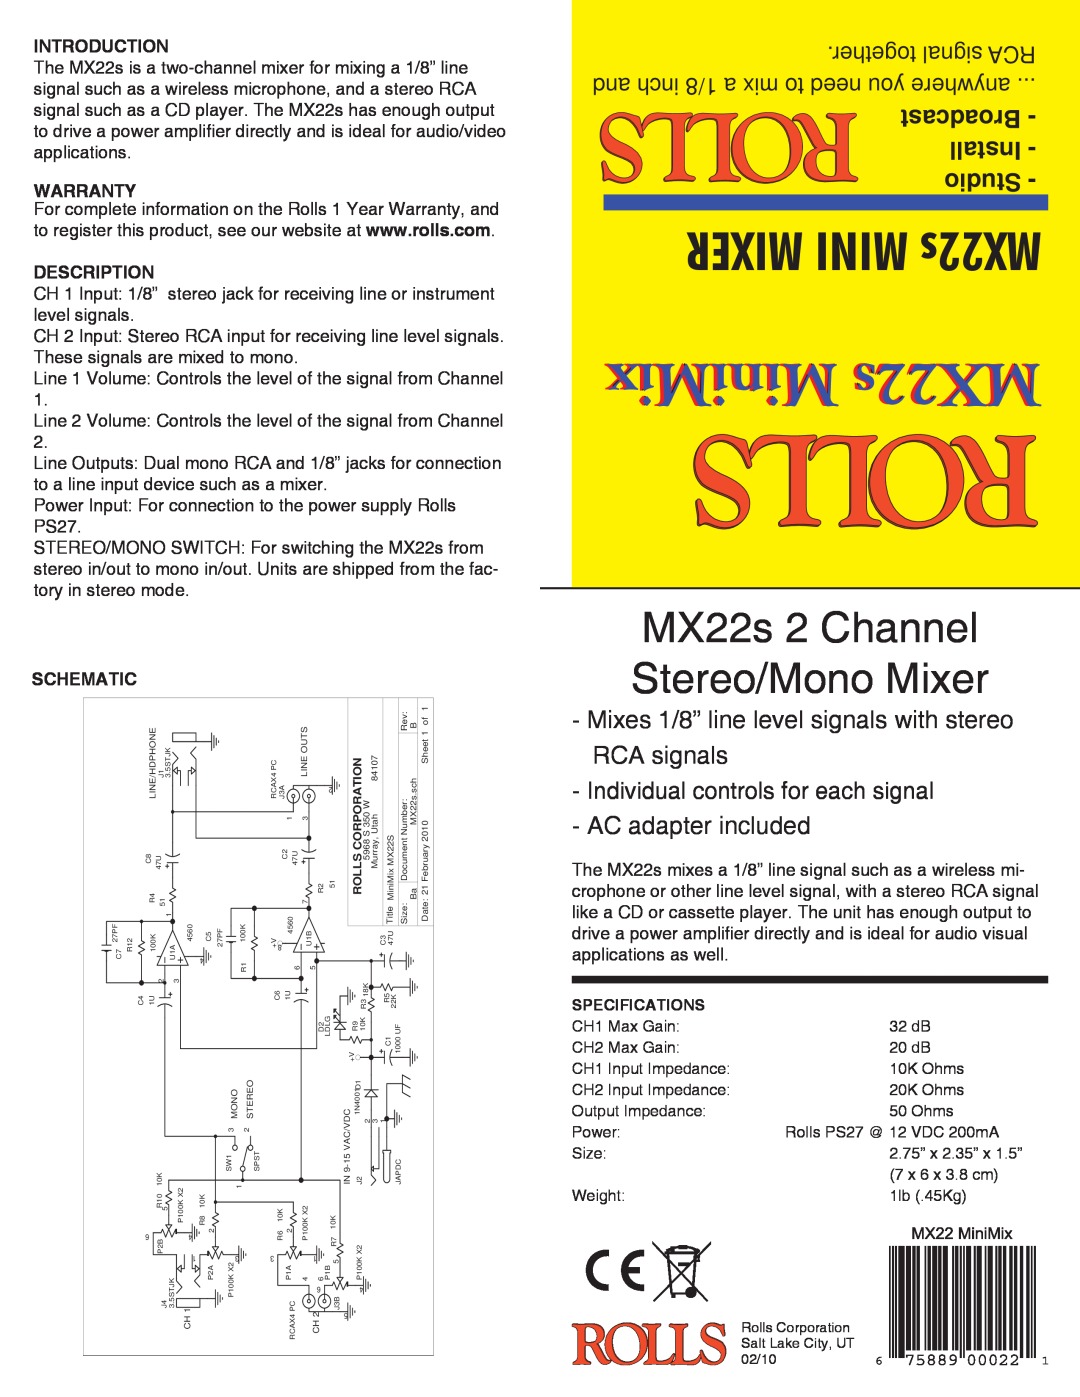 Rolls specifications MiniMix MX22s, MIXER MINI MX22s, MX22s 2 Channel Stereo/Mono Mixer, Introduction, Warranty 